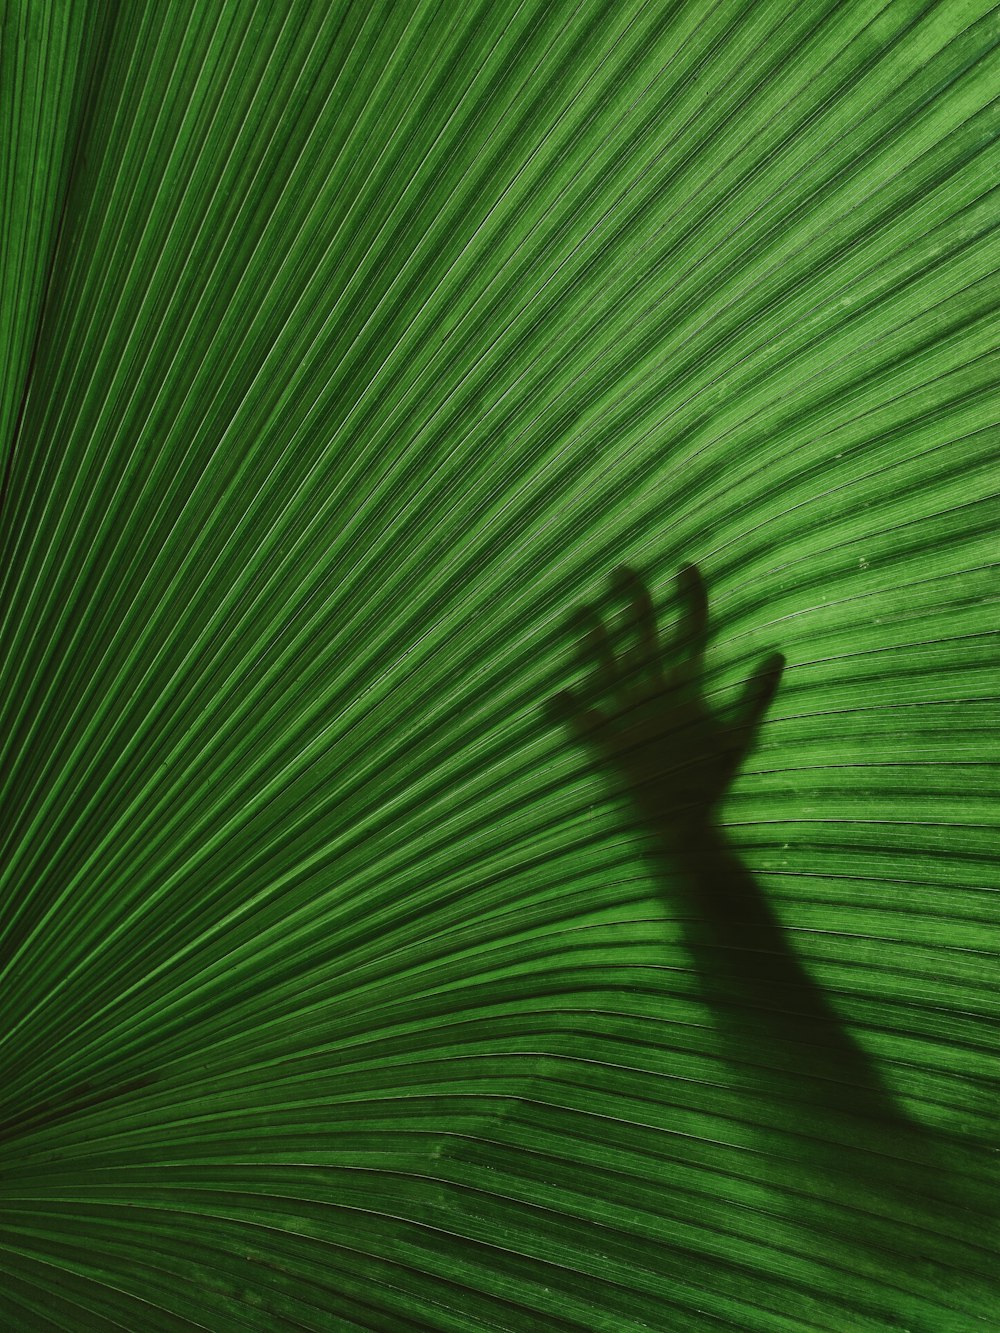 a shadow of a hand on a green leaf